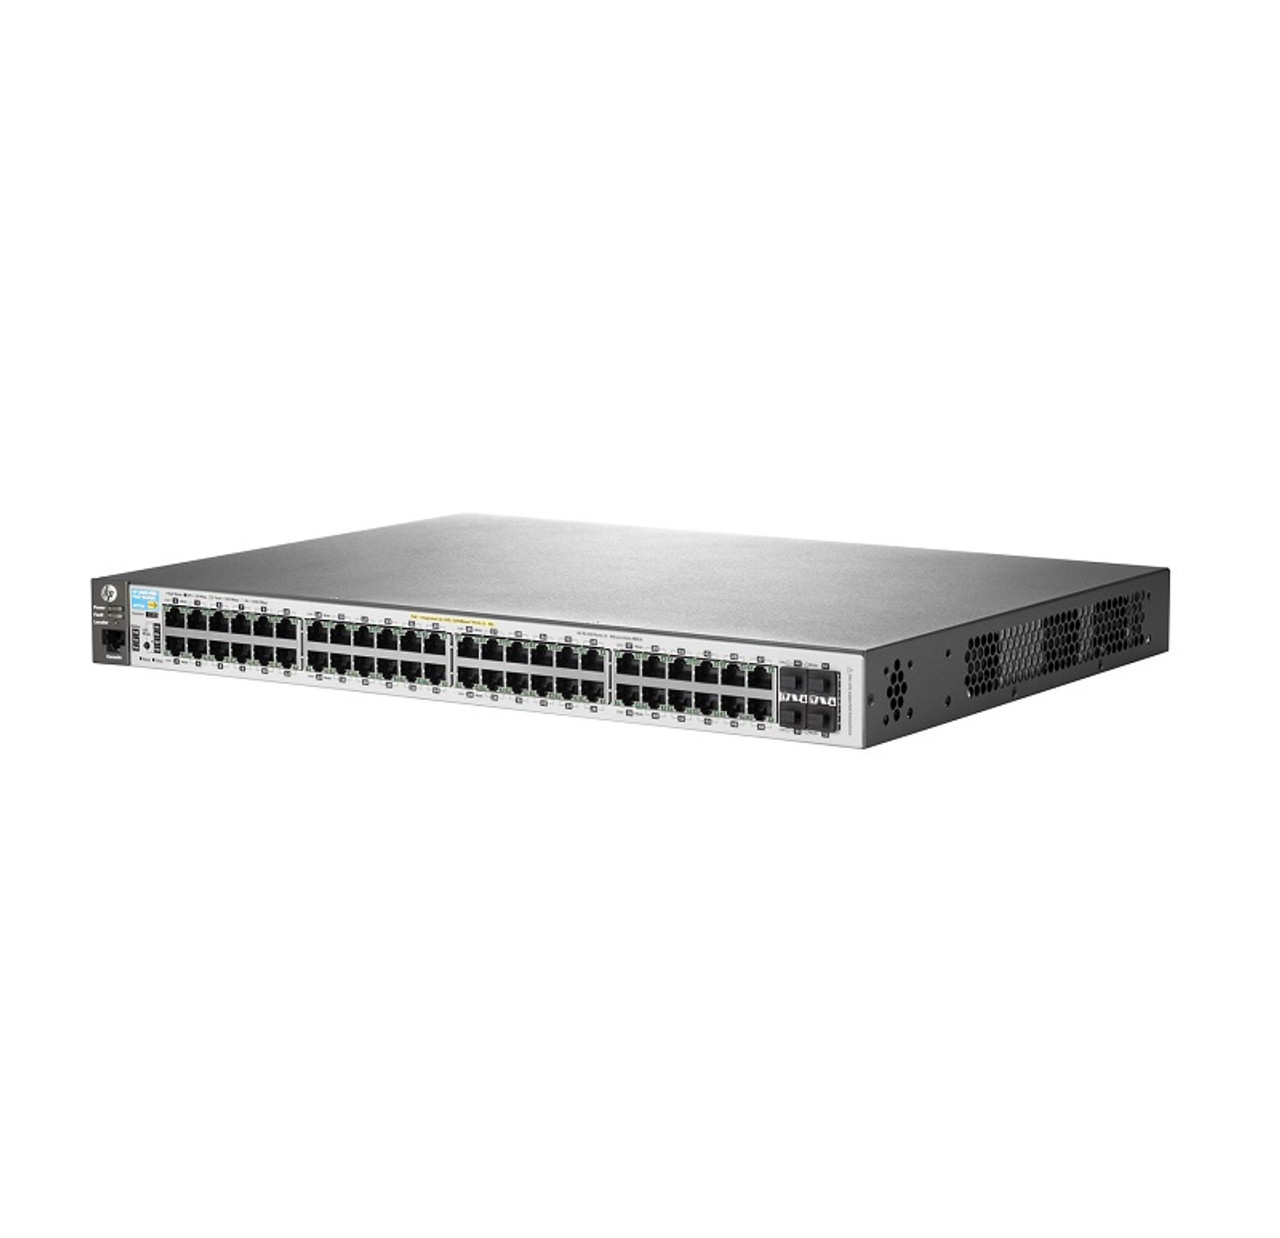 Part No:J9772A#ABB - HP ProCurve 2530-48G-PoE+ 48-Ports Manageable Gigabit Ethernet Switch 48 x 10/100/1000Base-T PoE+ with 4 x Gigabit SFP Ports Rack-Mountable